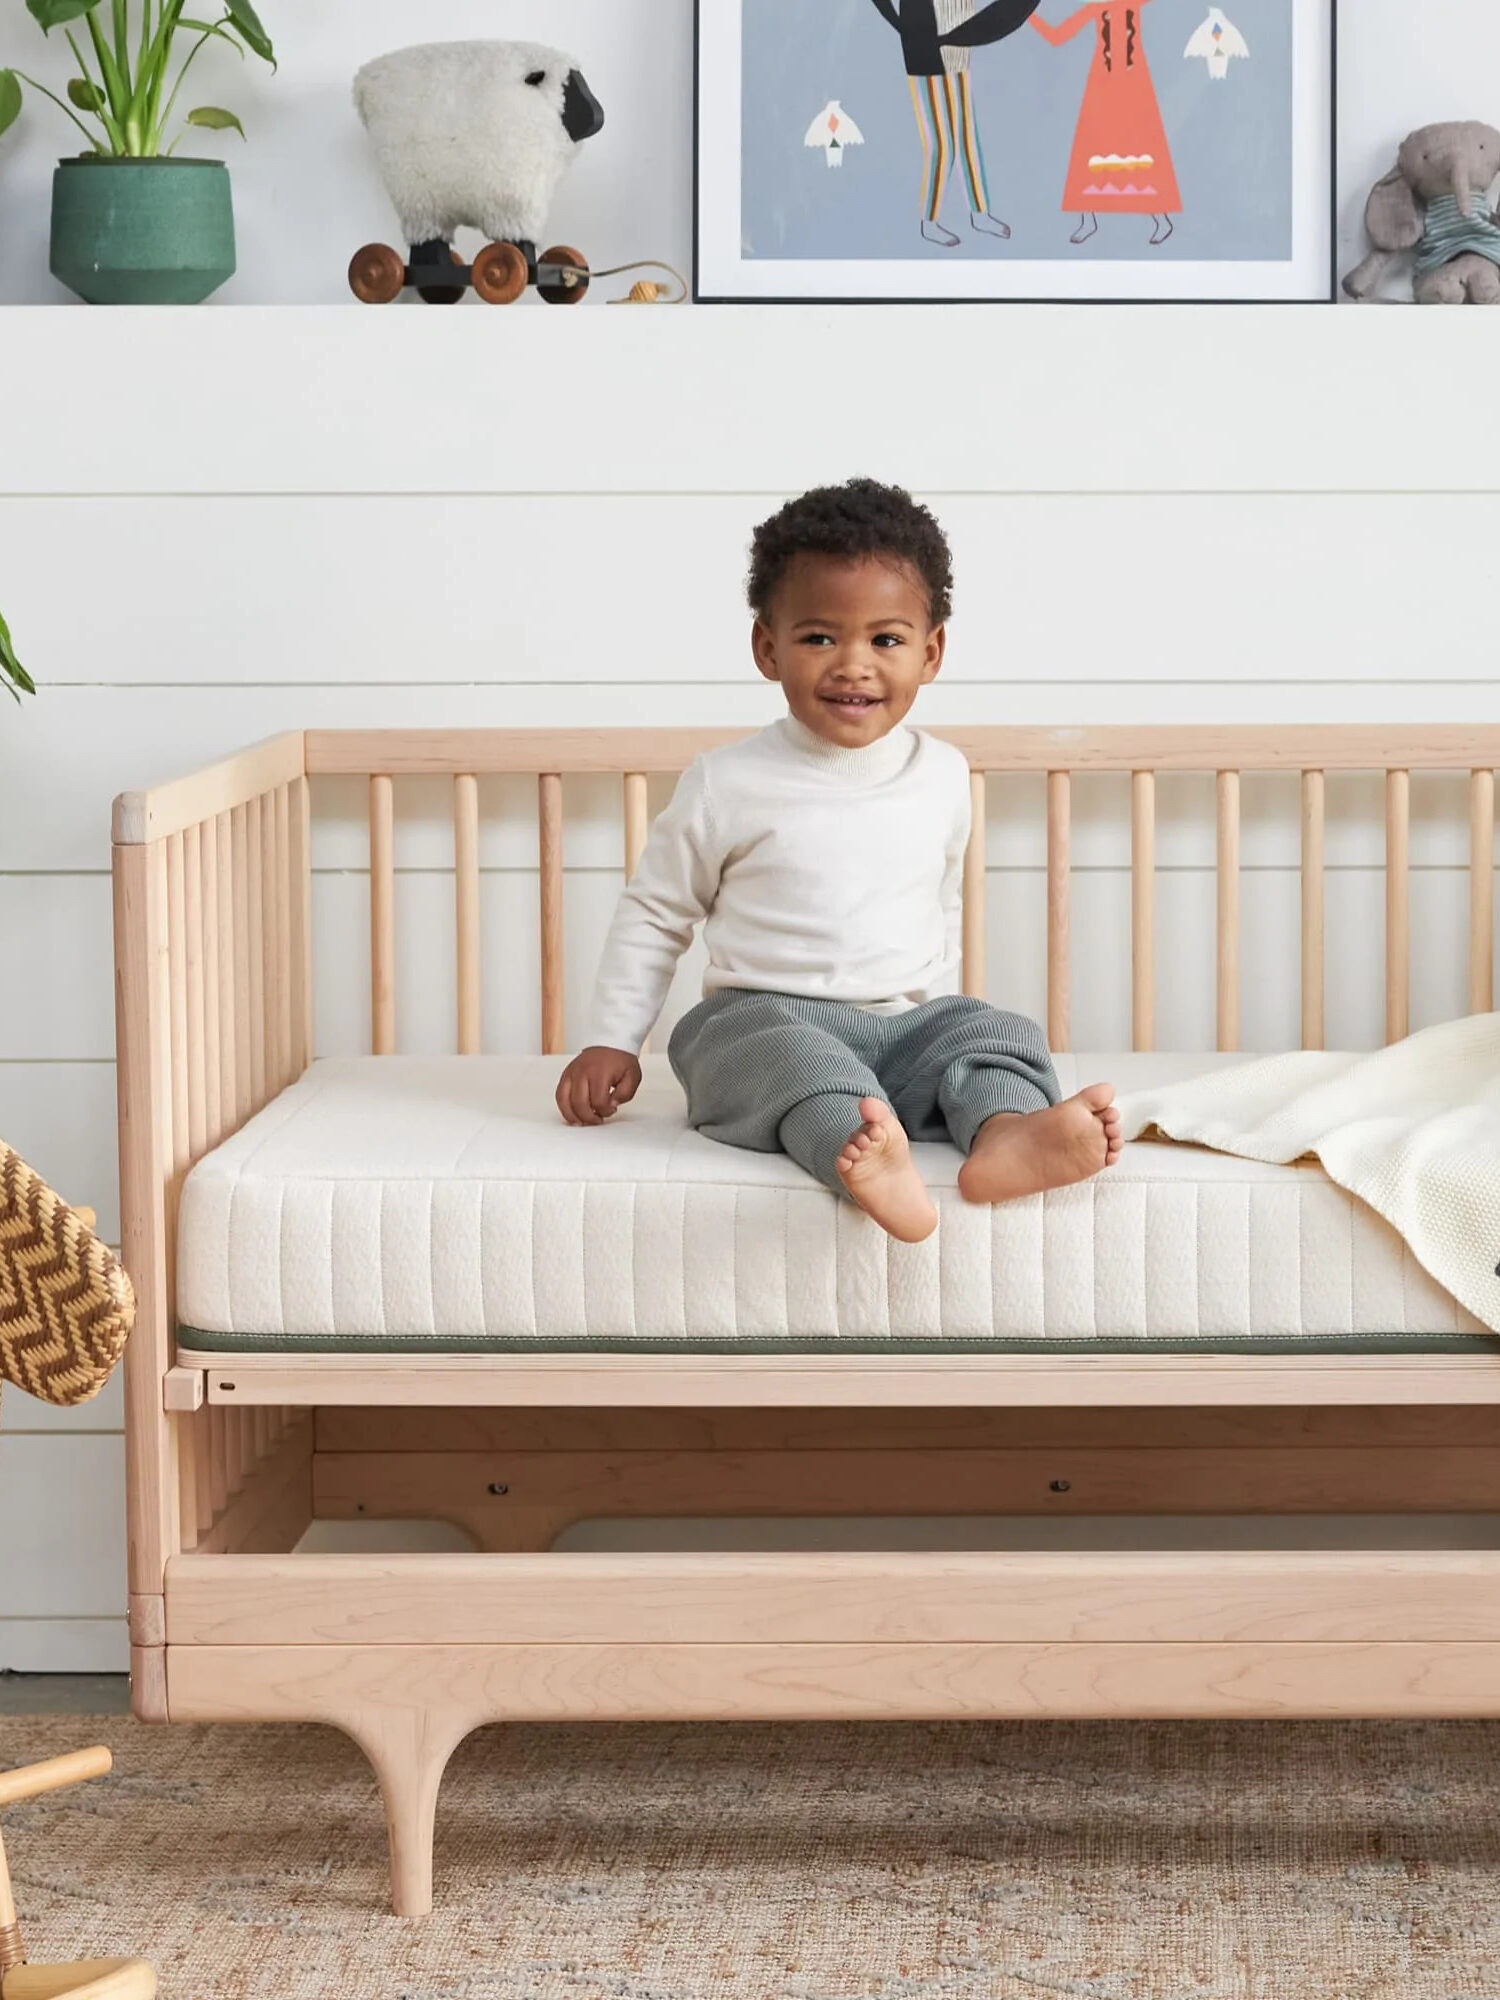 A young child sits on a Avocado crib mattress.